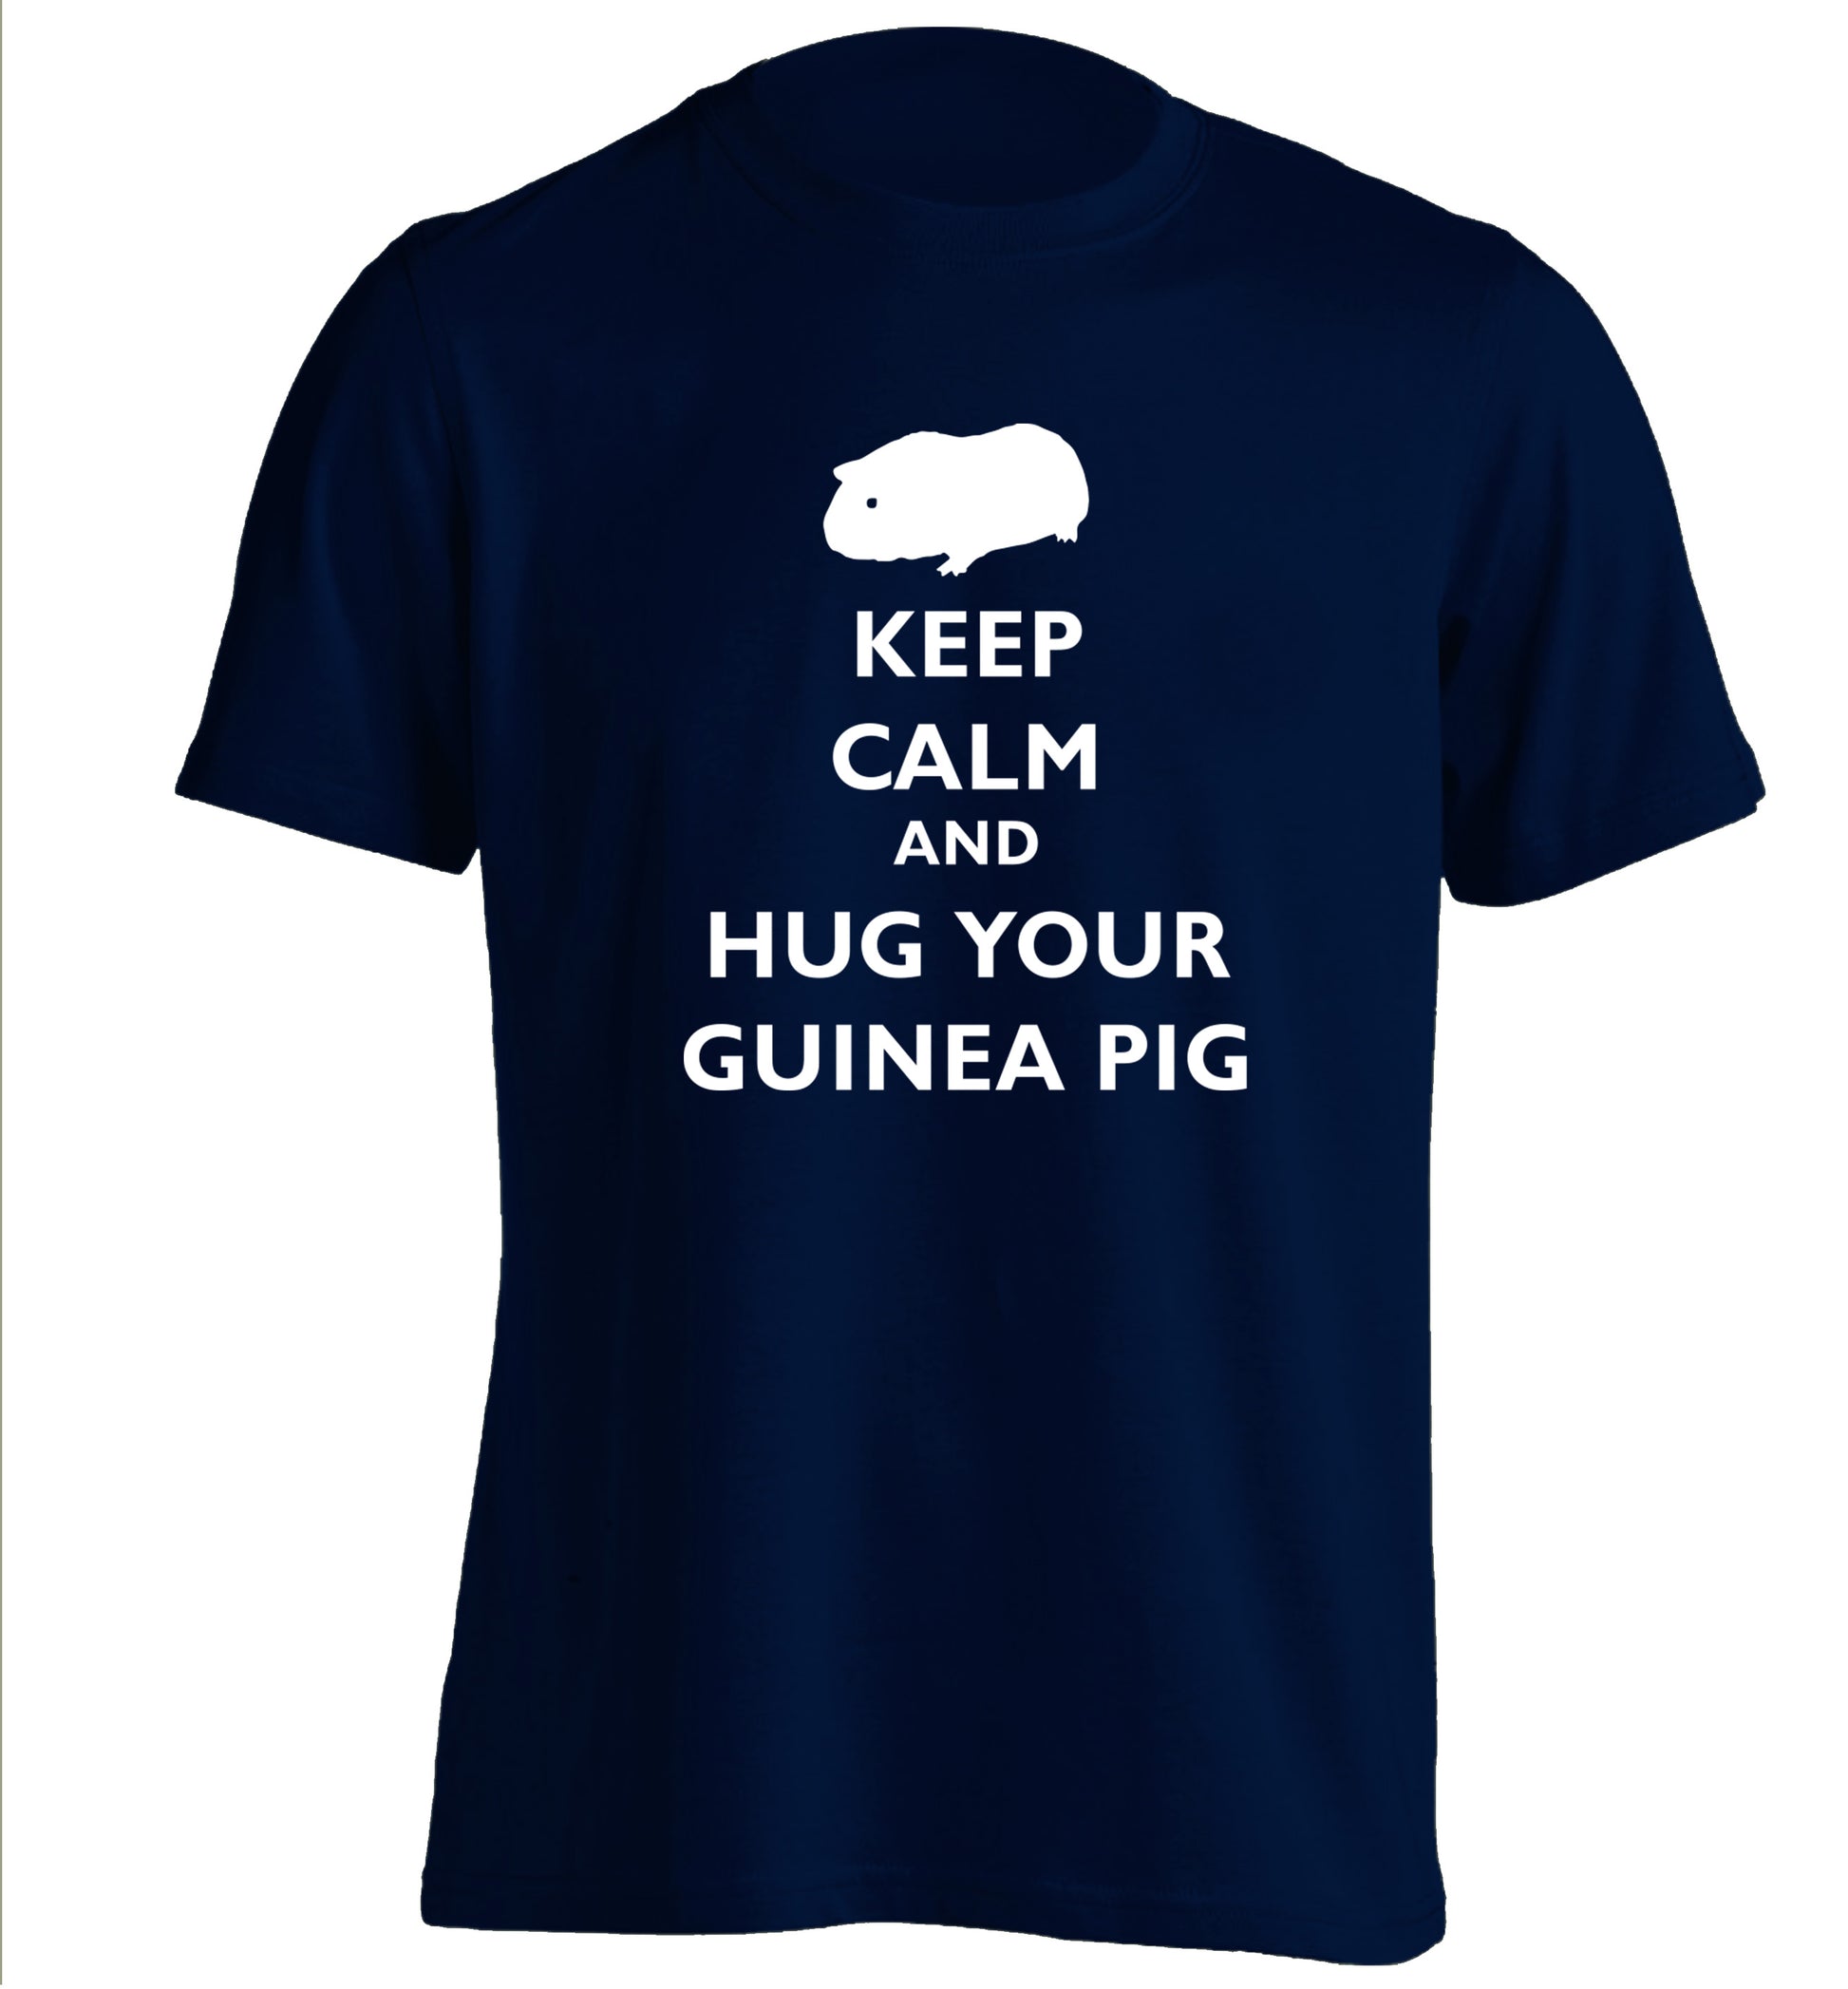 Keep calm and hug your guineapig adults unisex navy Tshirt 2XL